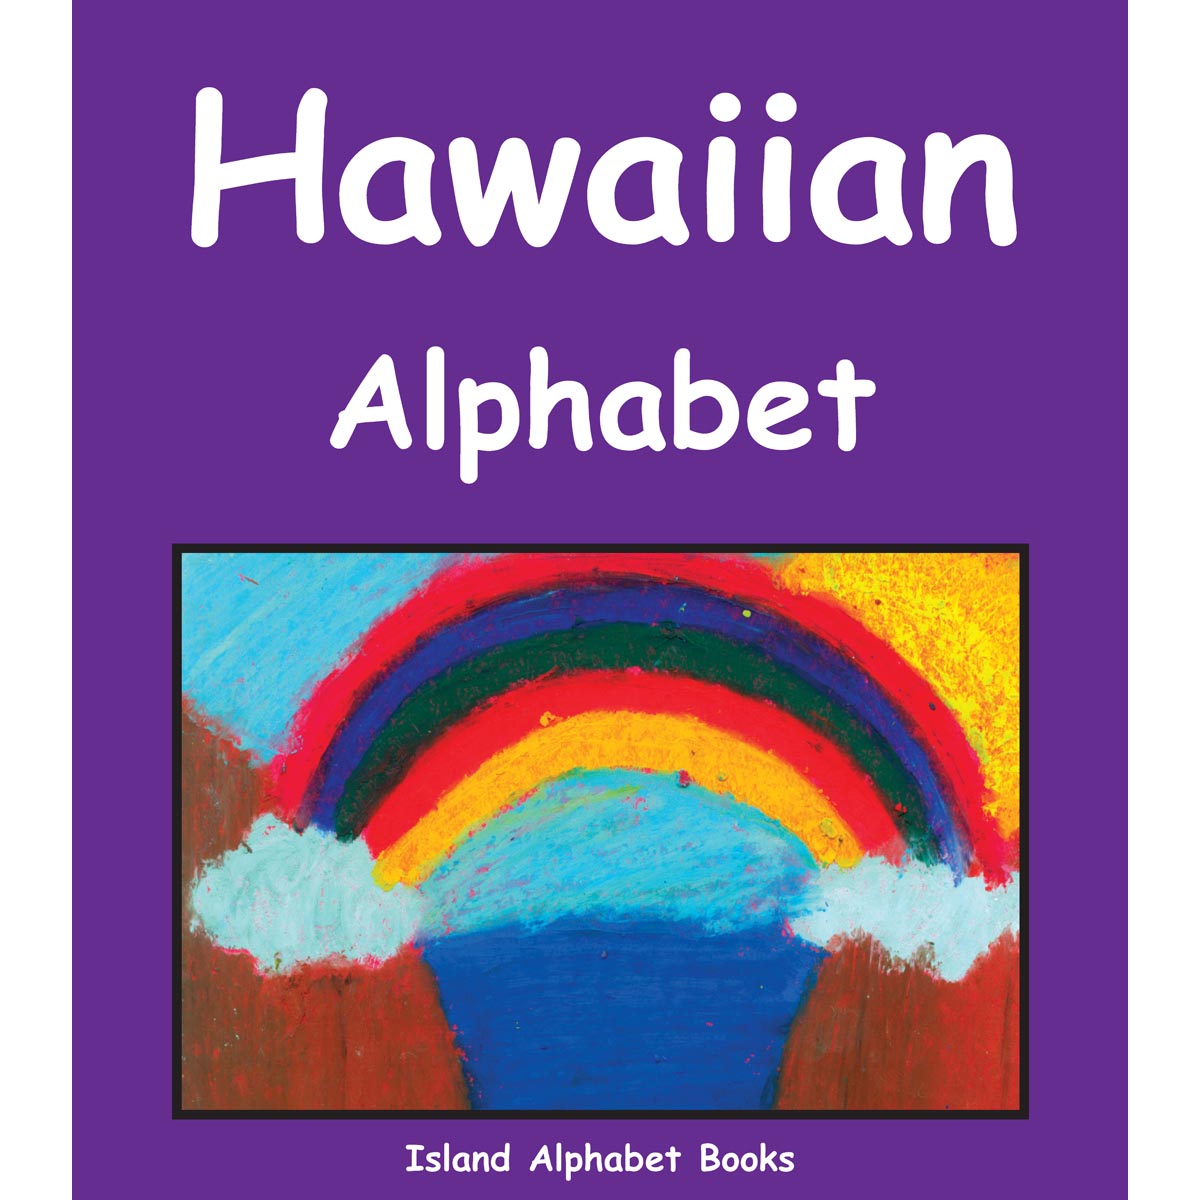 Island Alphabet: Hawaiian Alphabet